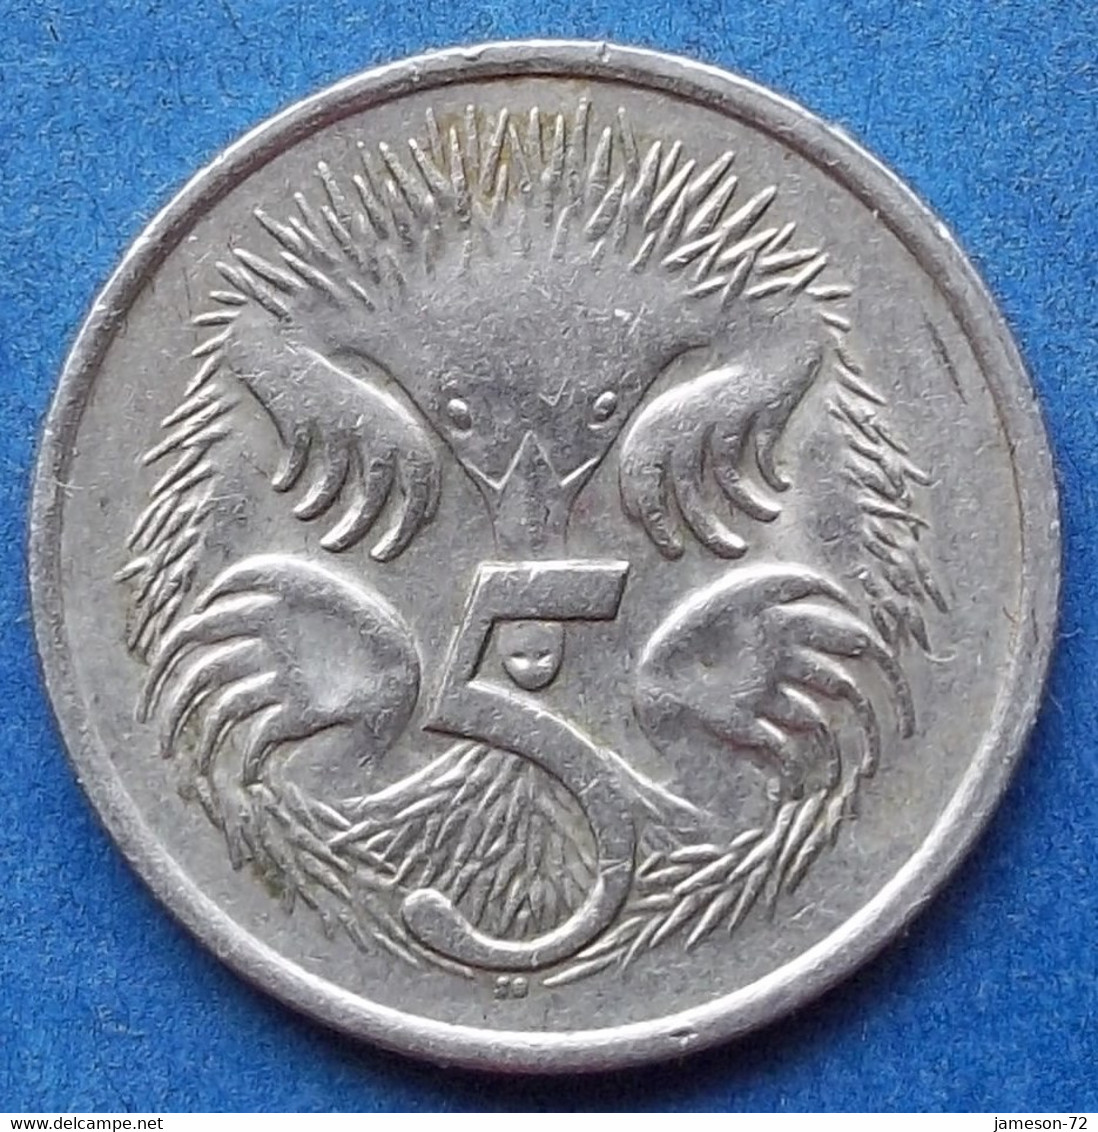 AUSTRALIA - 5 Cents 1981 "echidna" KM# 64 Elizabeth II Decimal - Edelweiss Coins - Unclassified